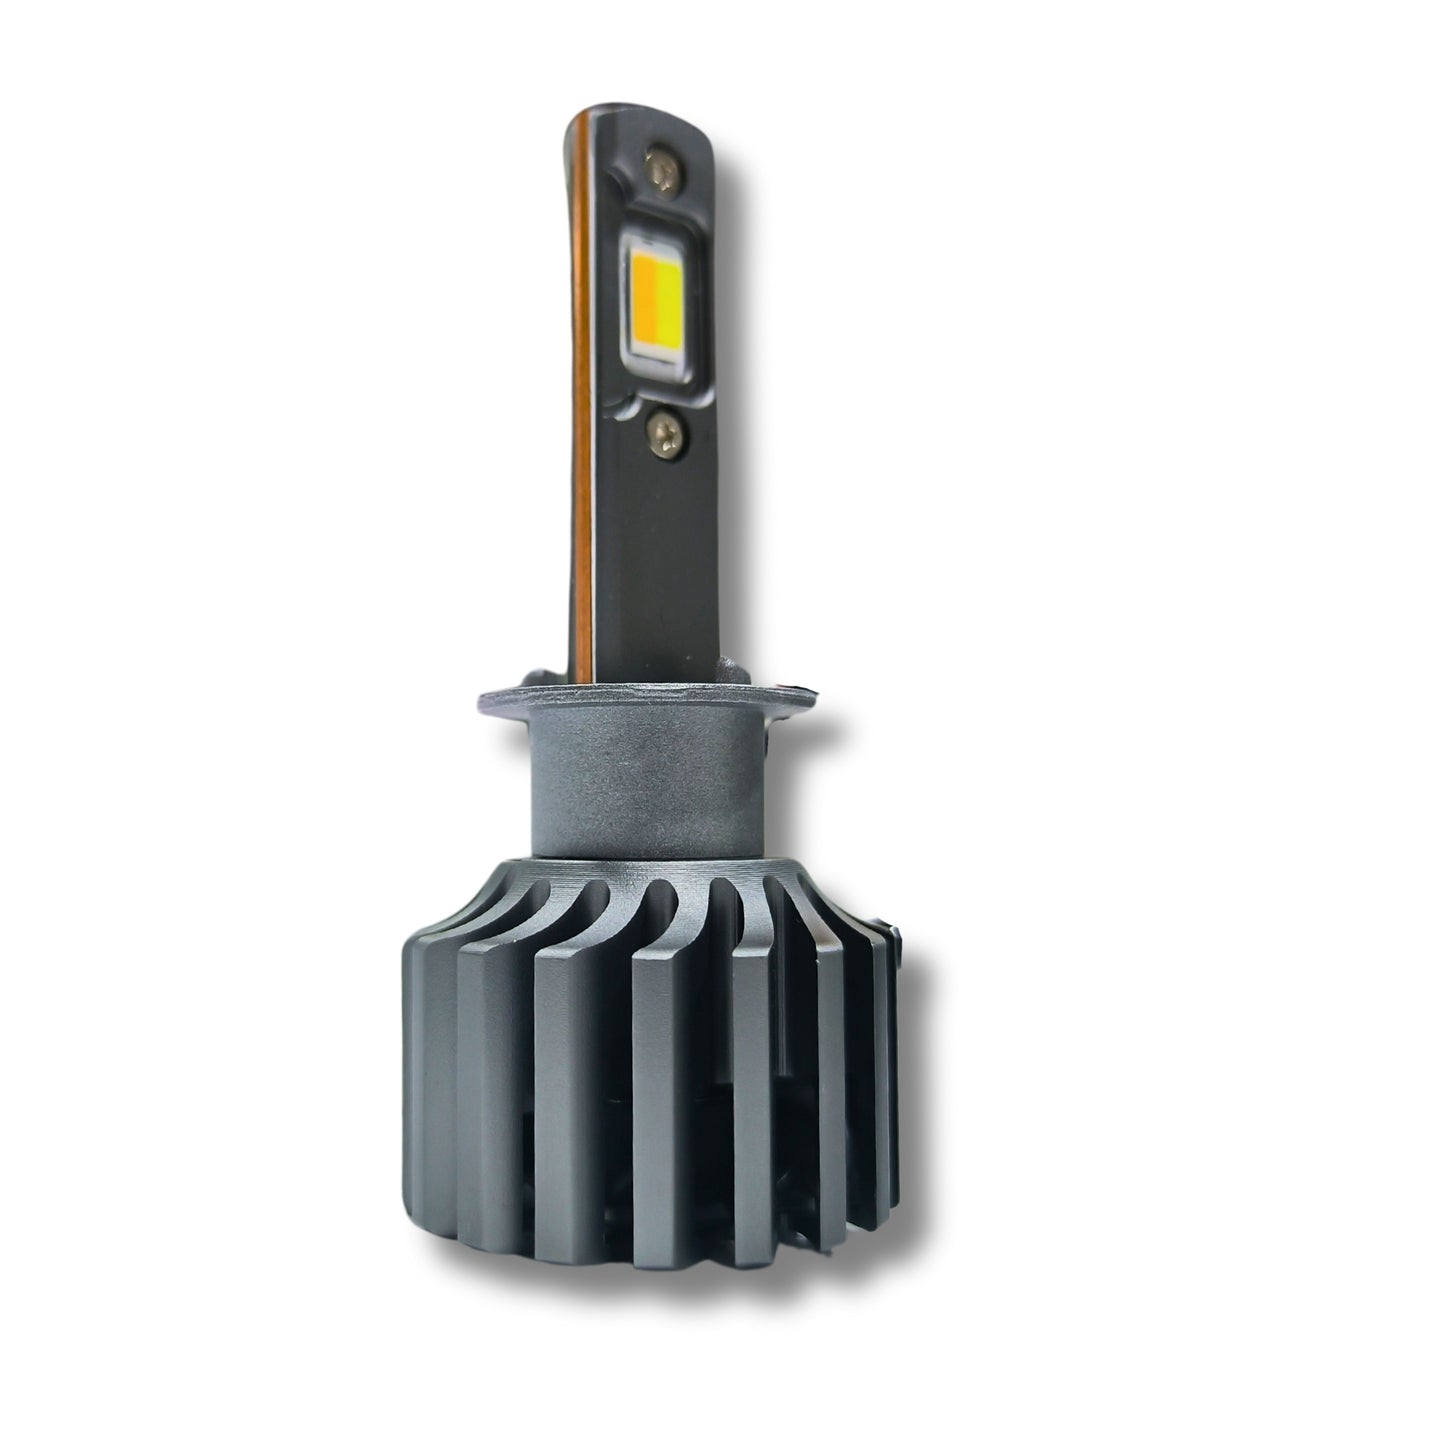 Potauto Maxi-X3LEDynamic Headlight LED Bulb: 3 Color Light, 12V, 120W Power, All-Weather Performance